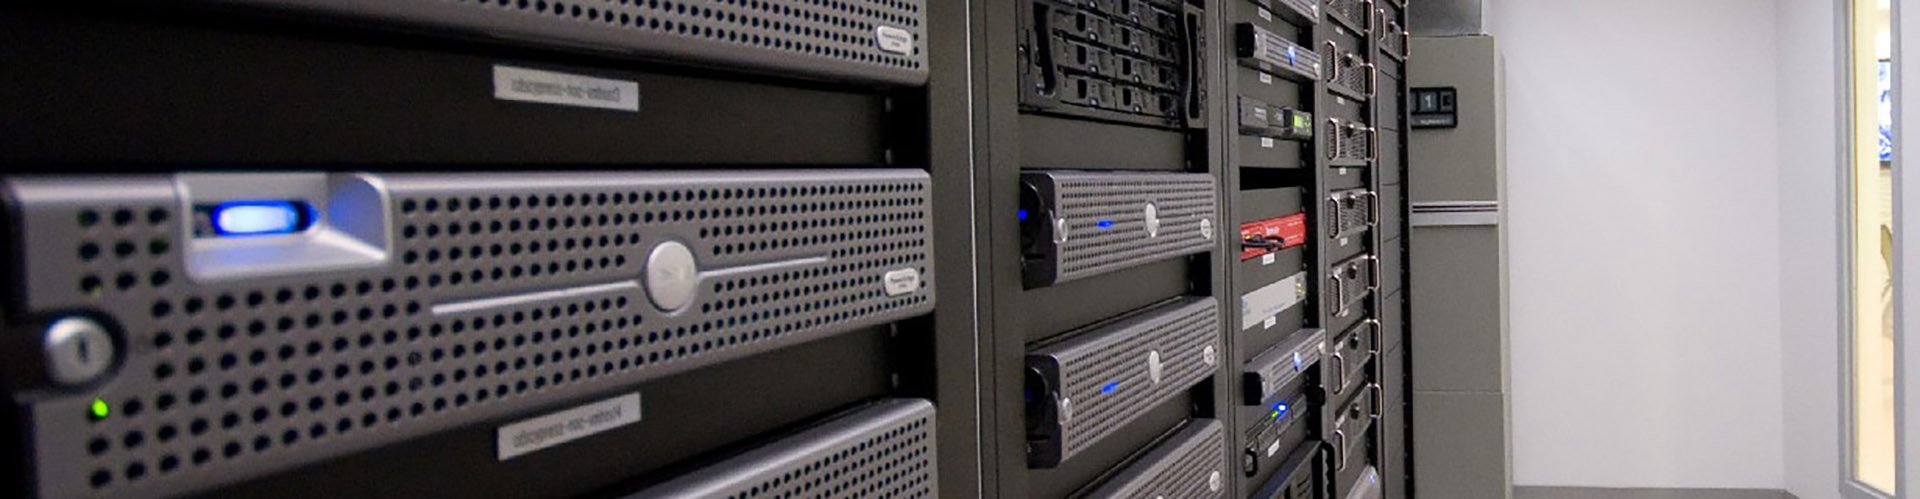 cloud vps server hosting